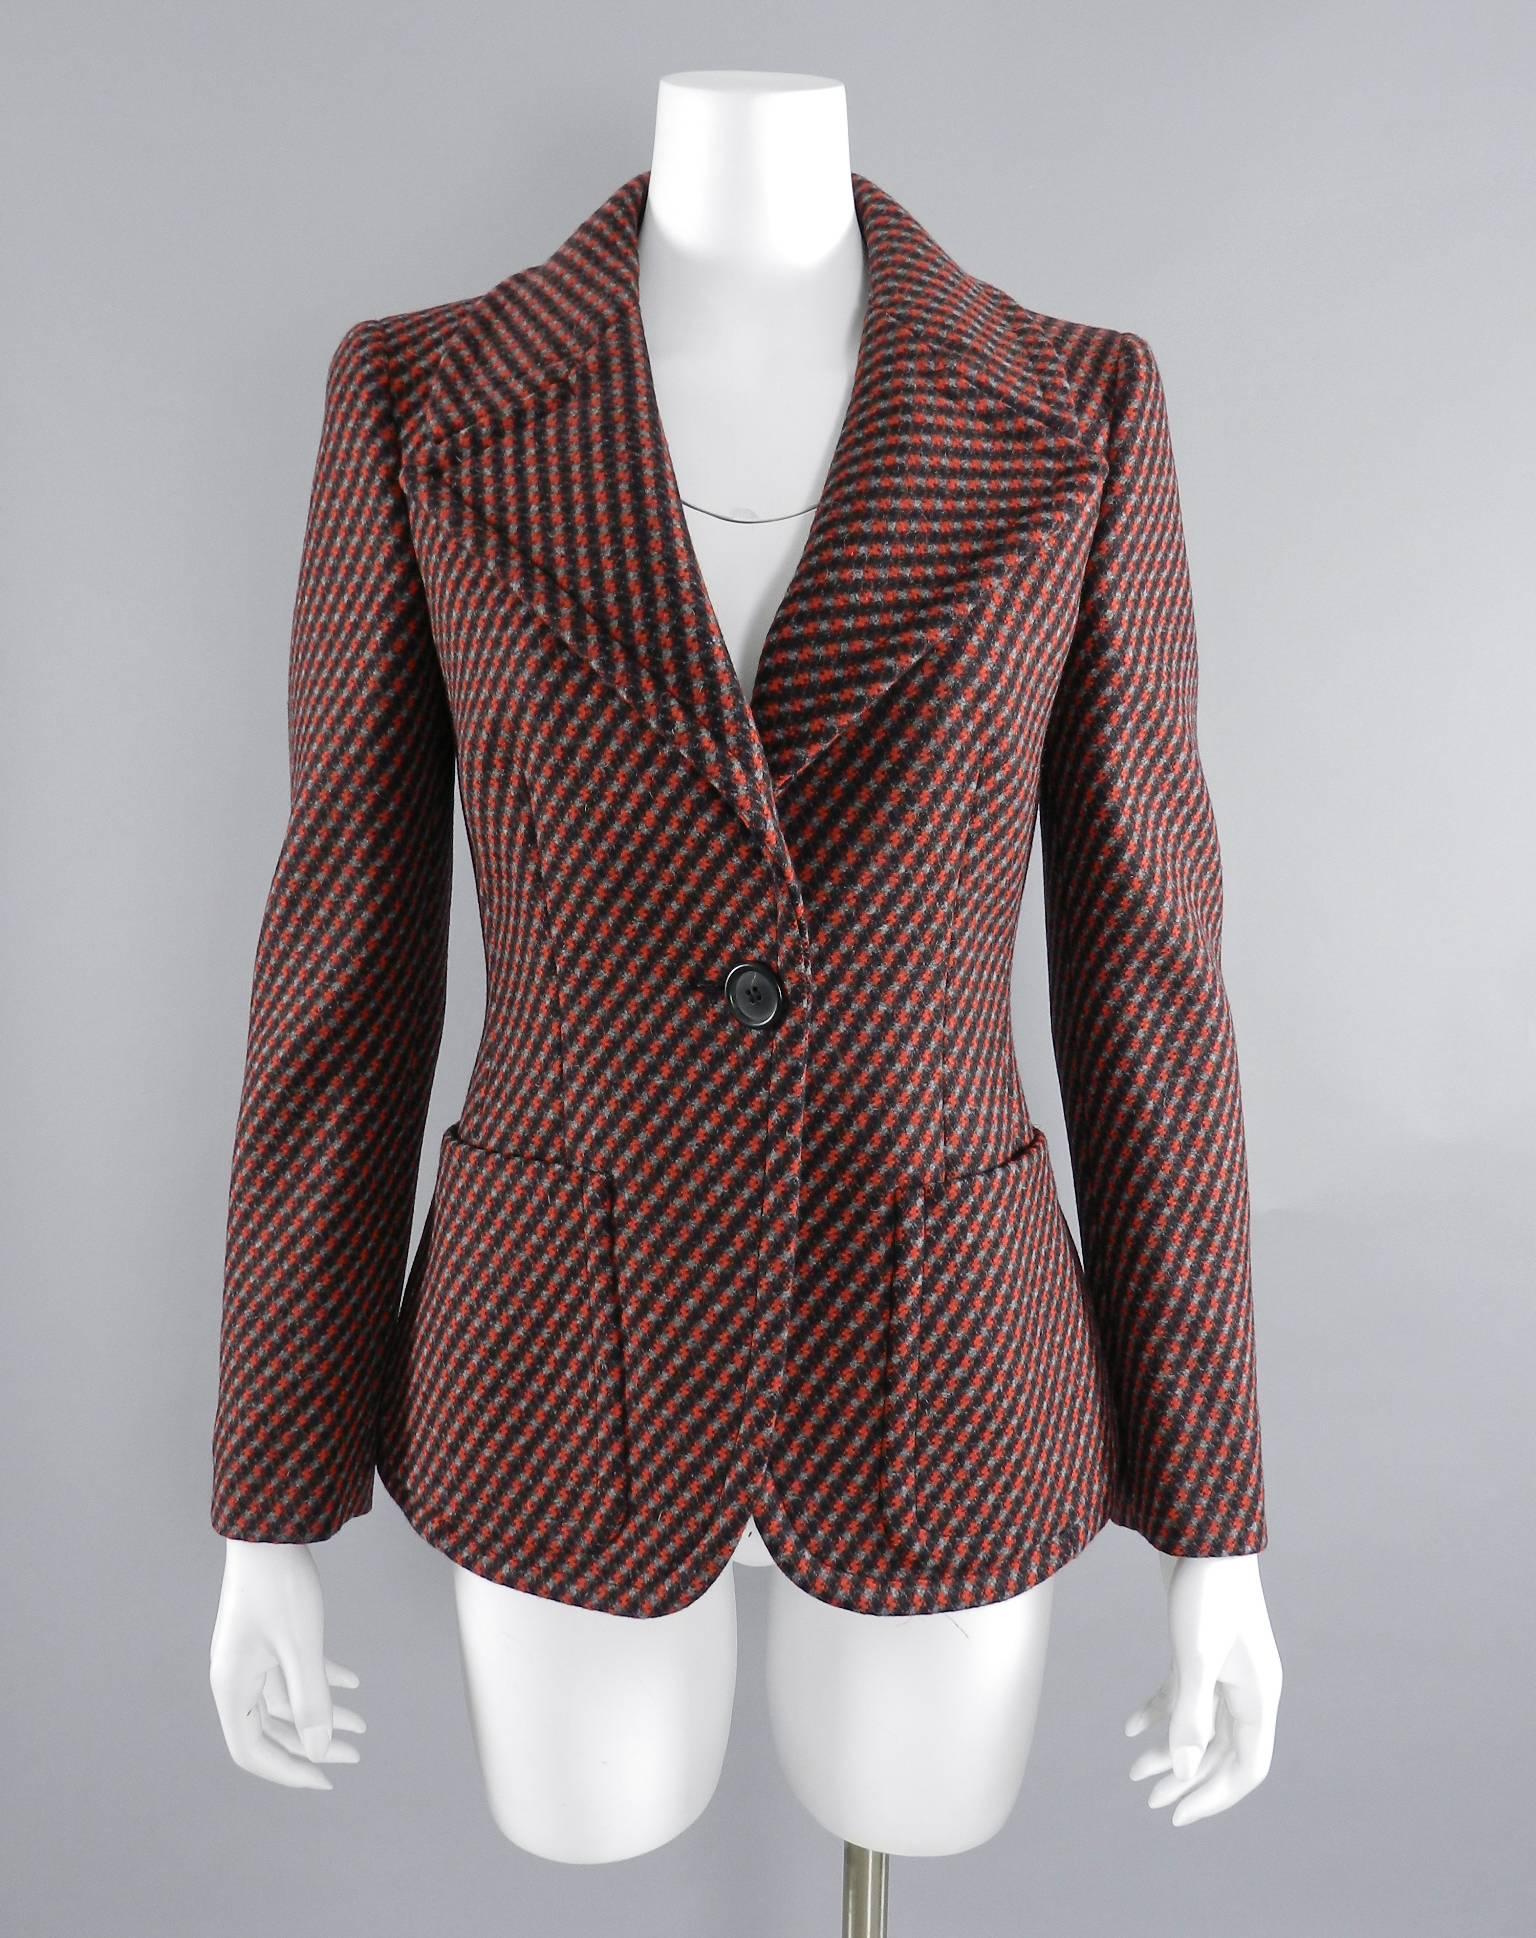 PRADA fall 2014 red / grey / black Fitted Wool Blazer / Jacket 2